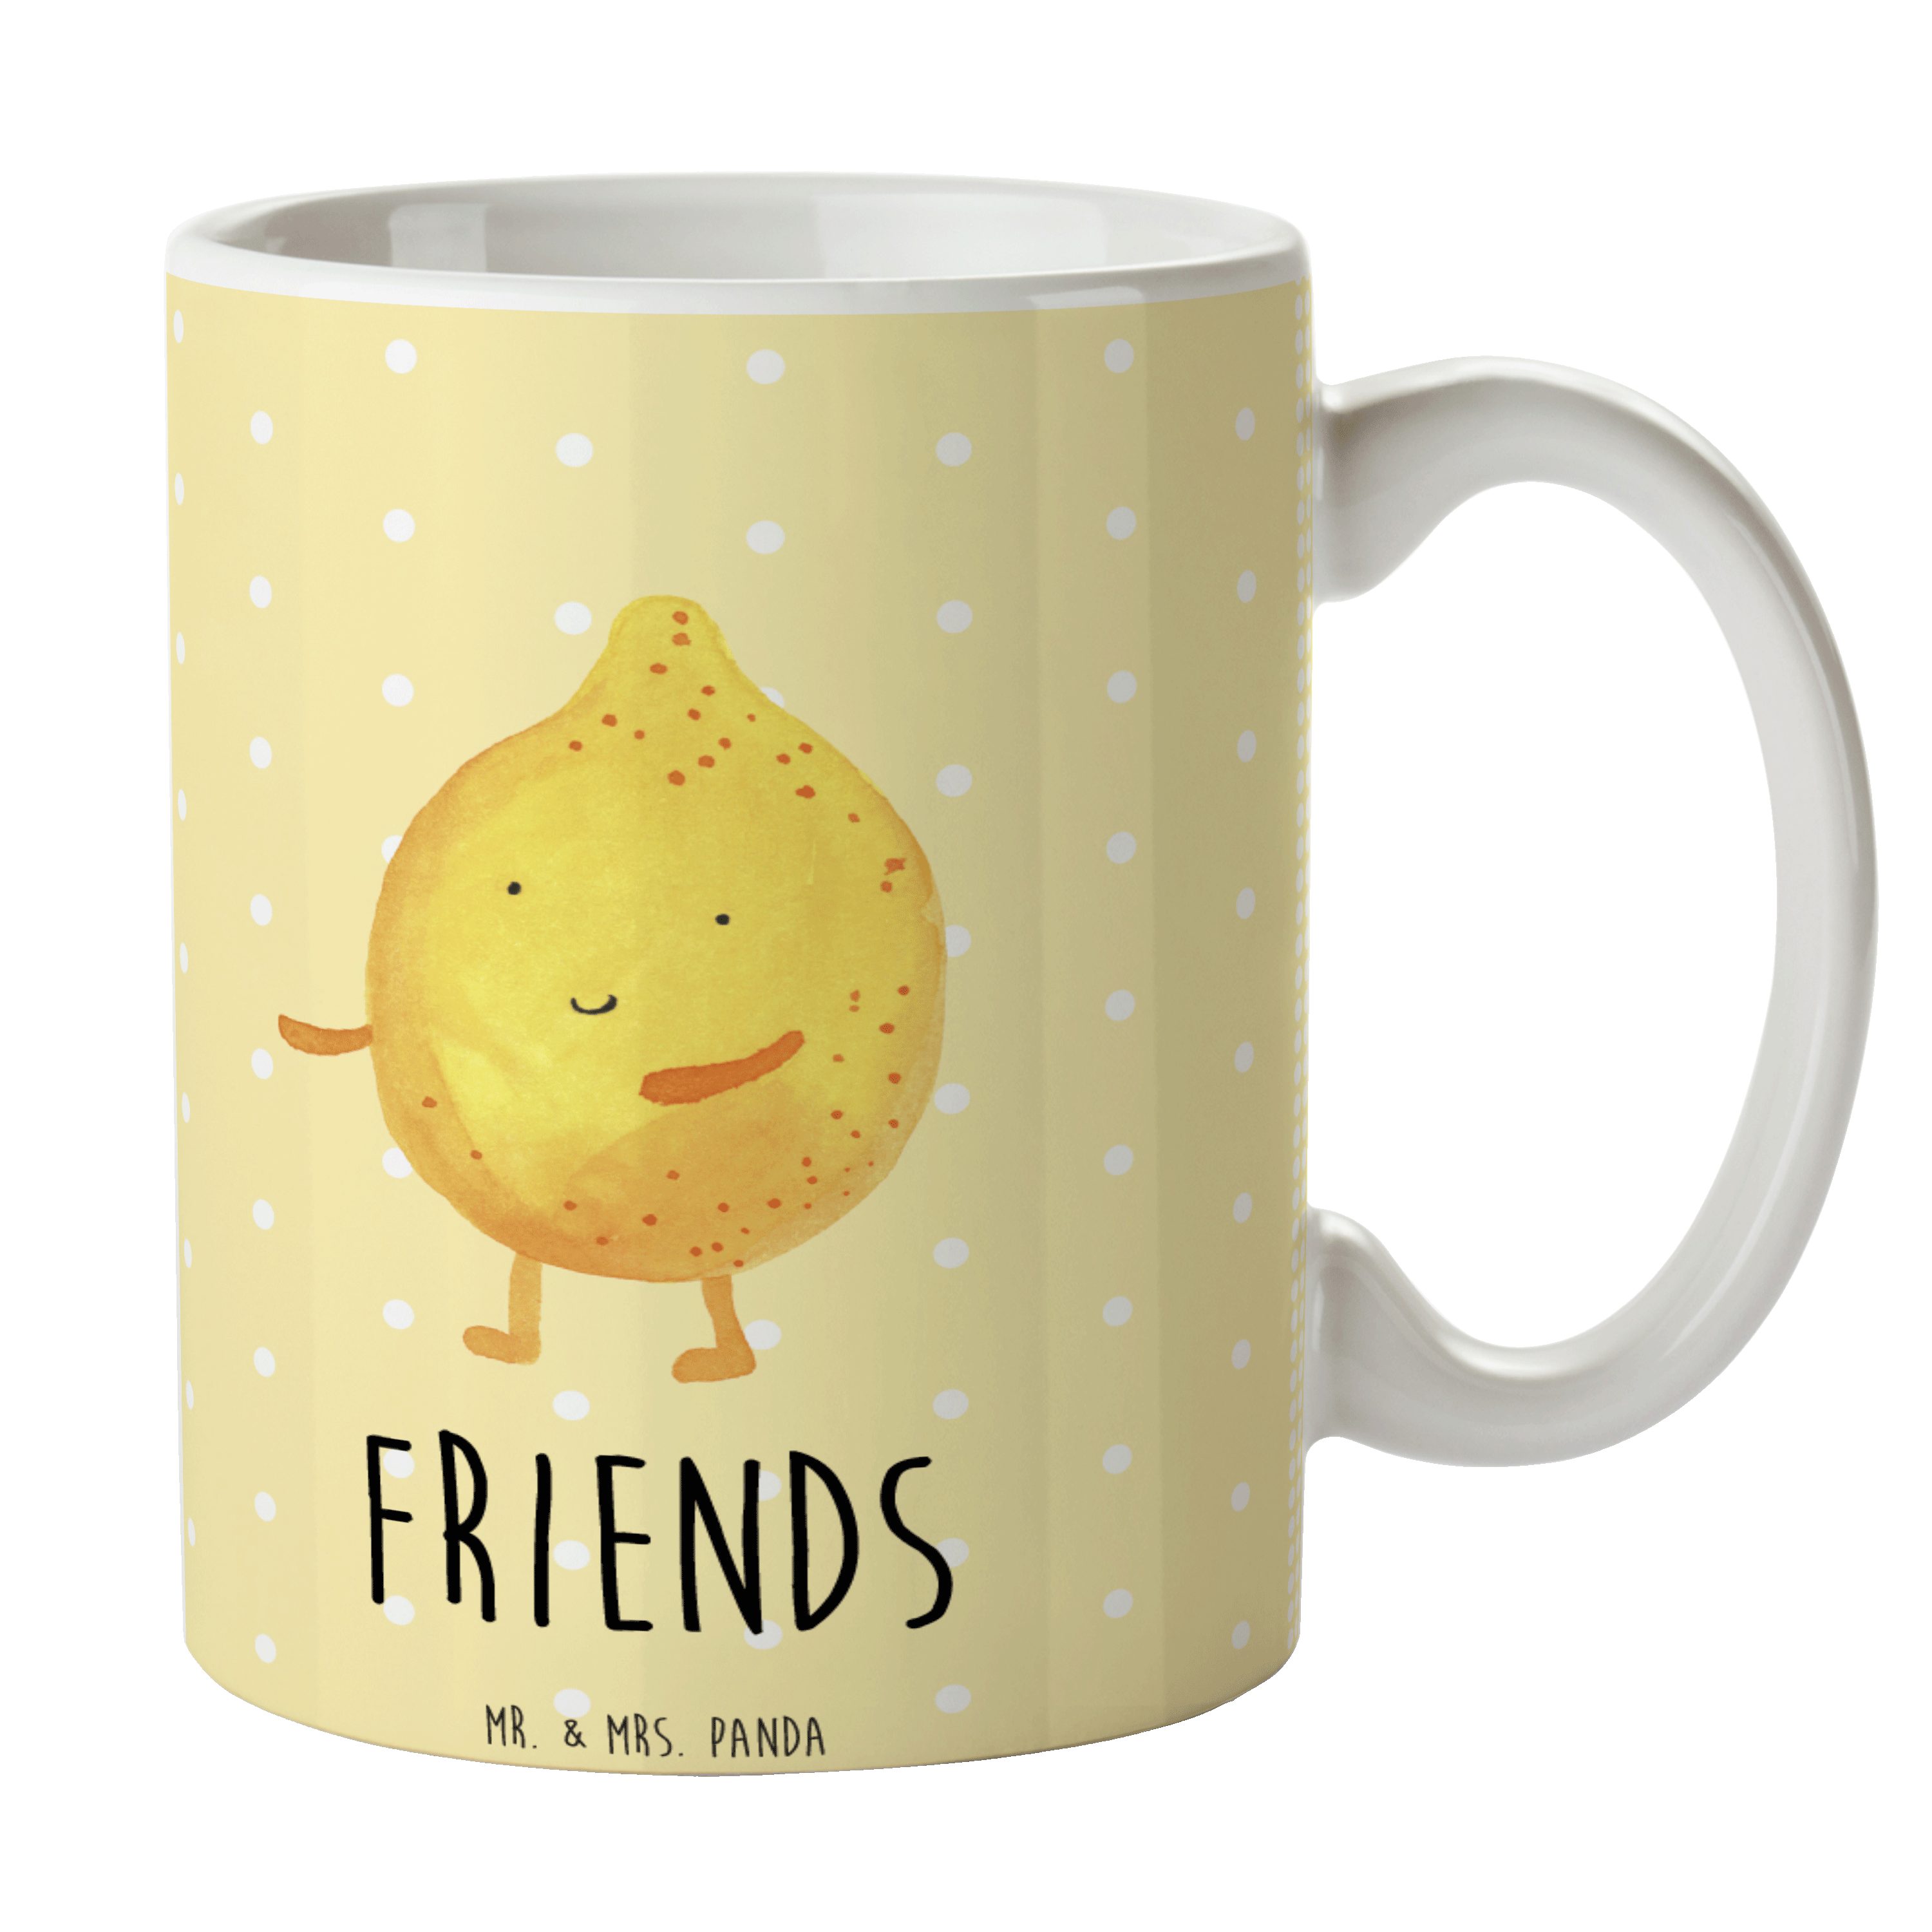 Mr. & Mrs. Panda Tasse BestFriends-Lemon - Gelb Pastell - Geschenk, Porzellantasse, Kaffeeta, Keramik